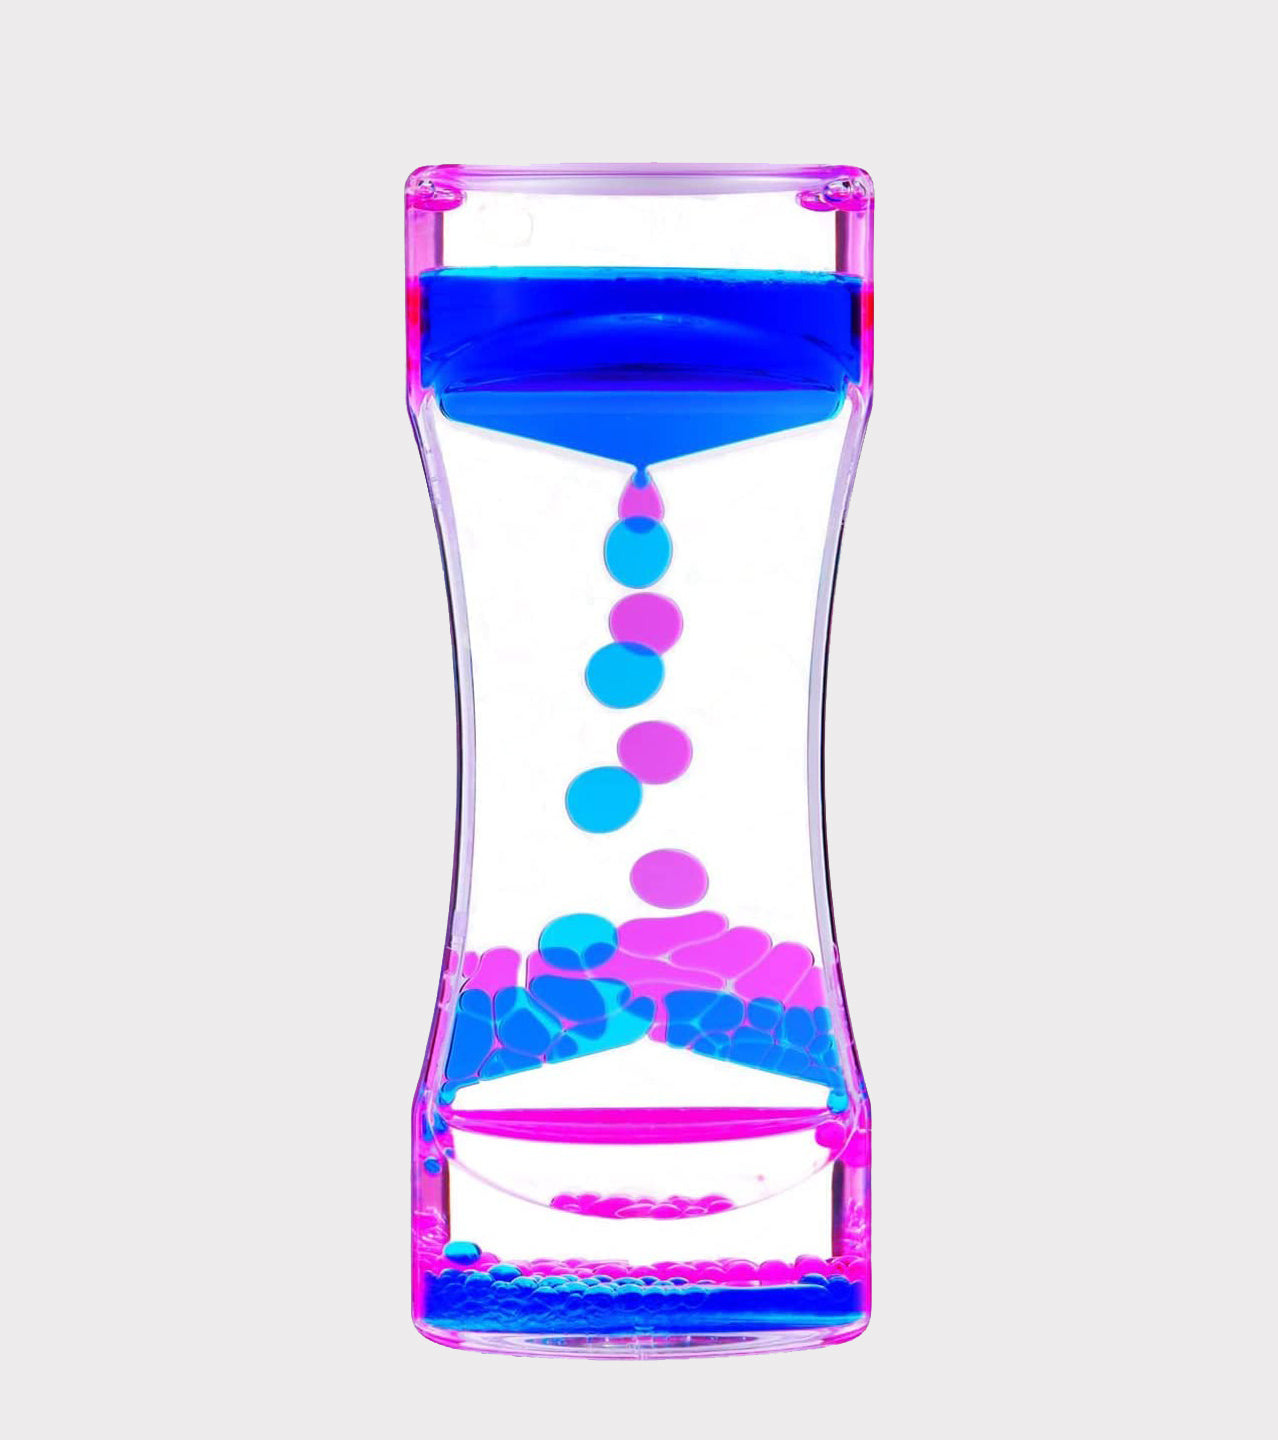 Liquid Motion Bubbler